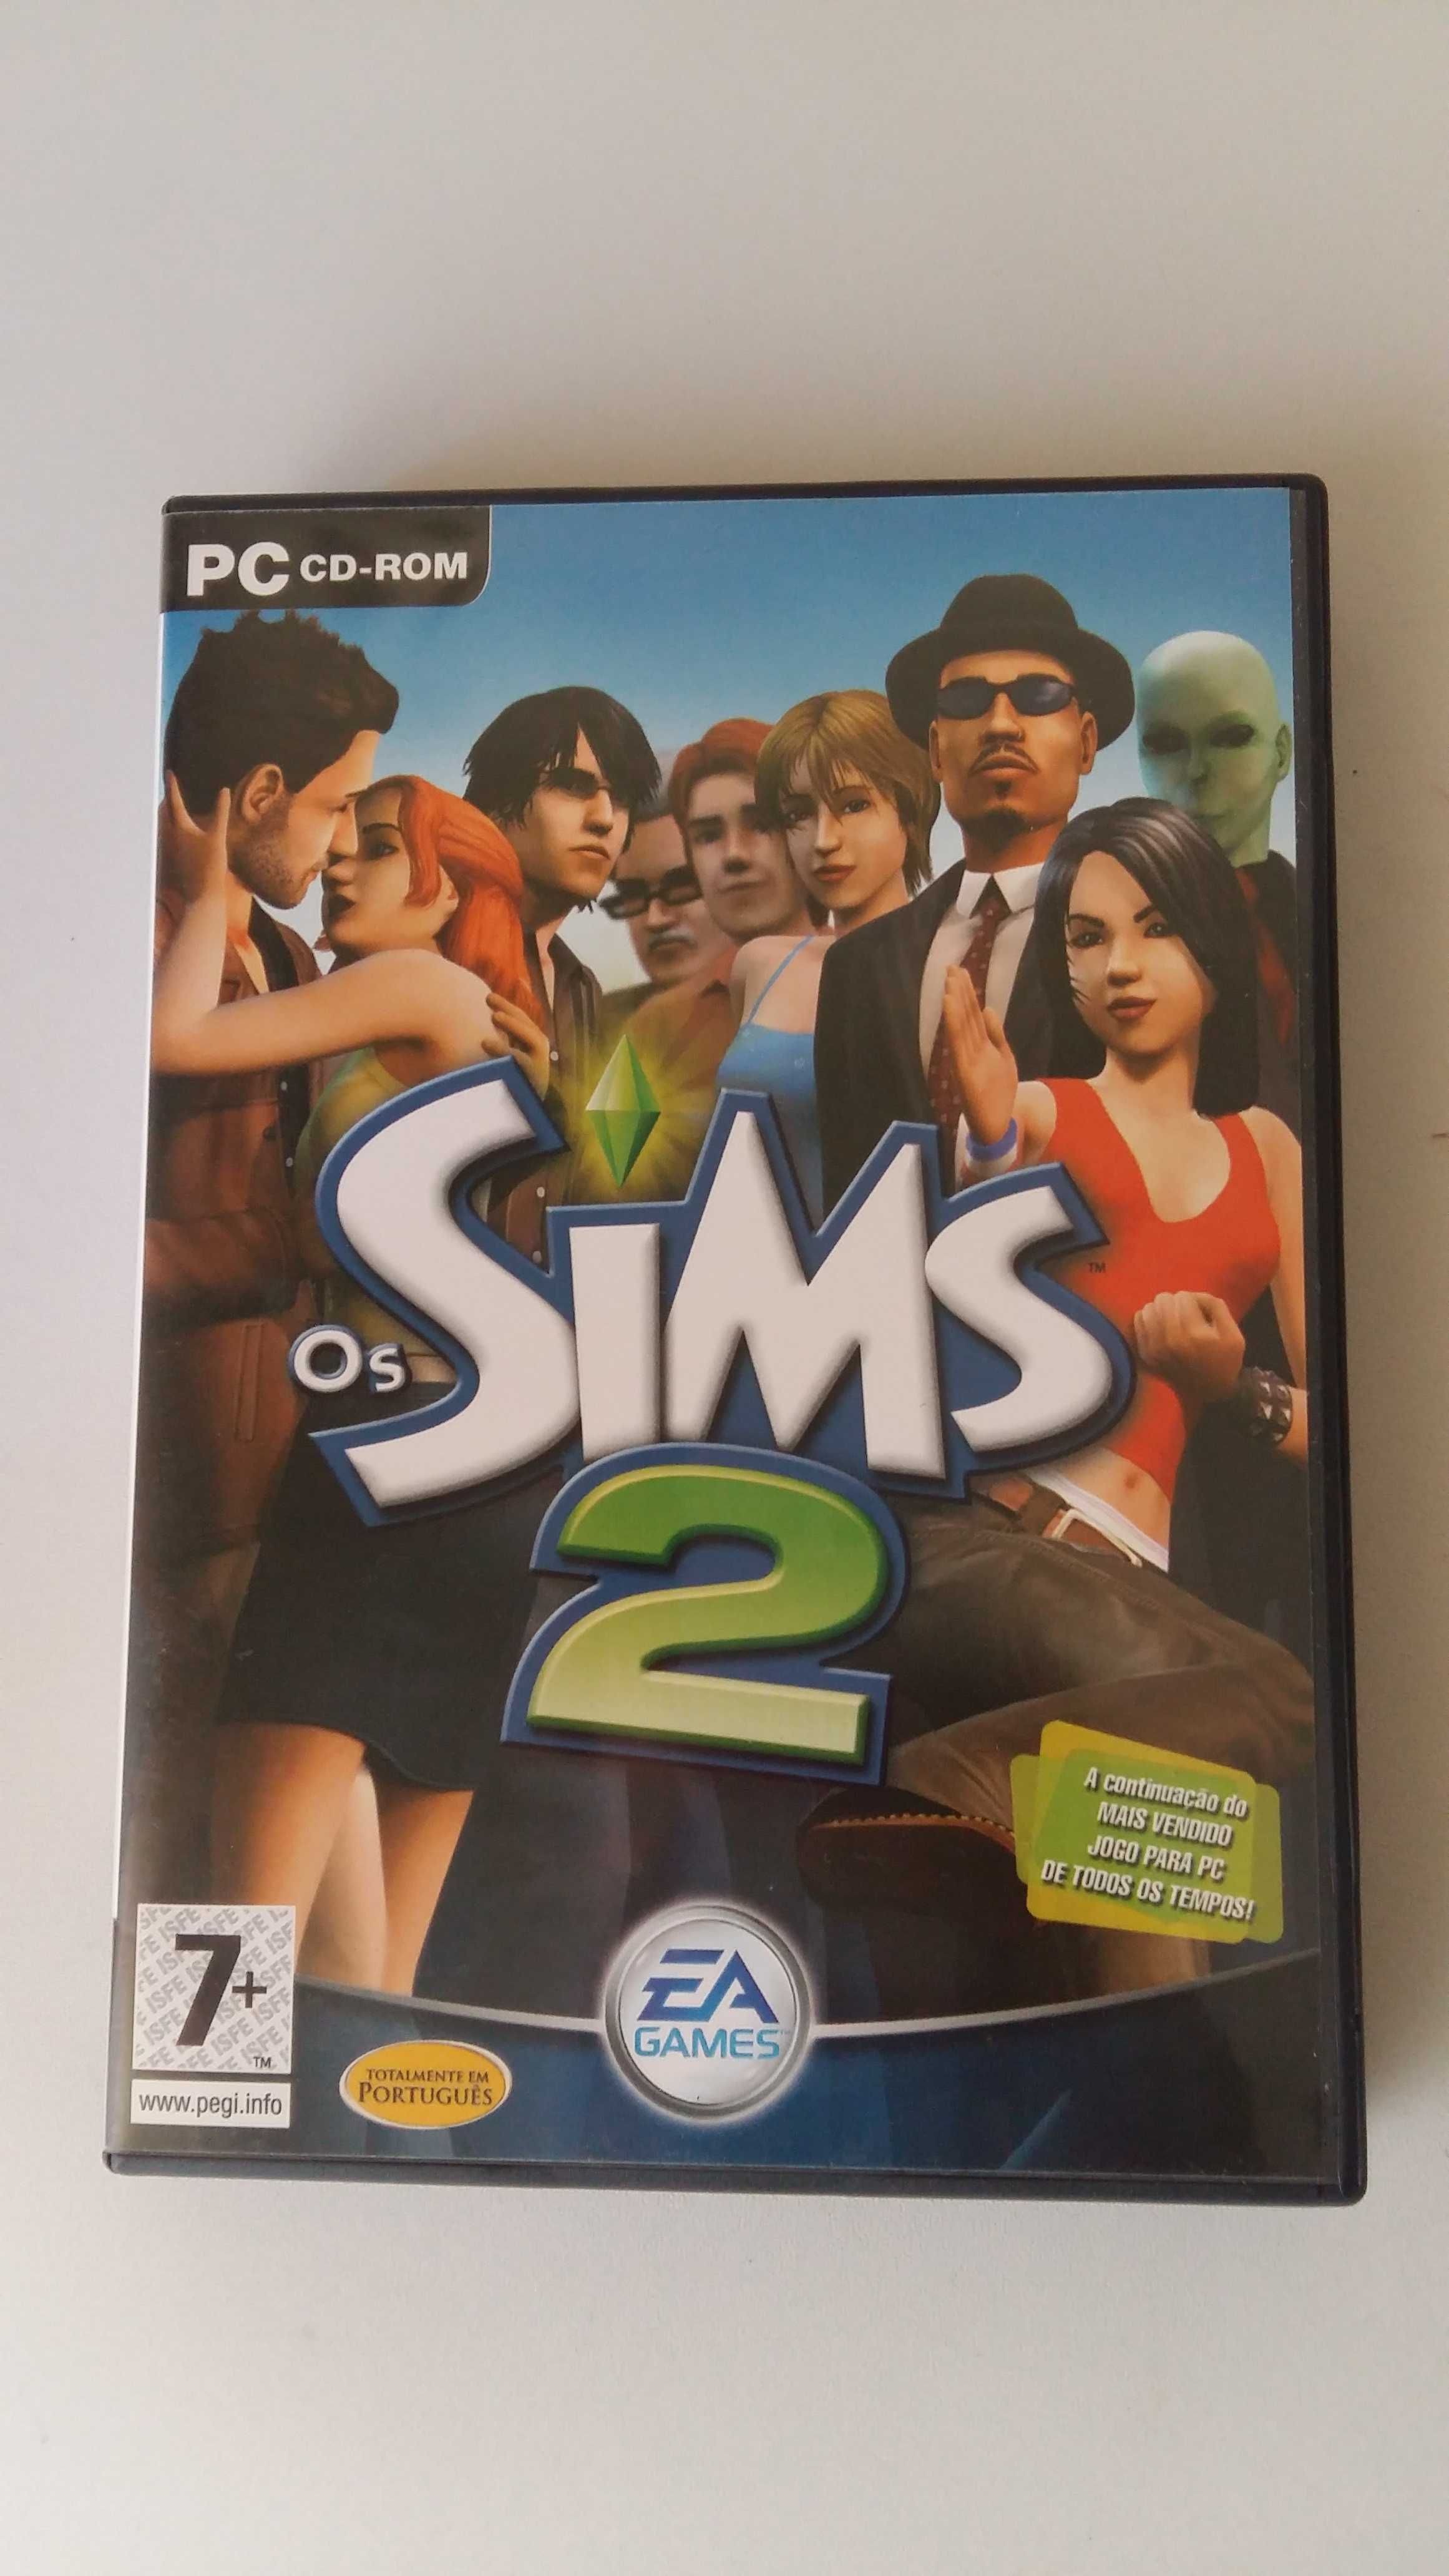 The Sims 2 + expansões